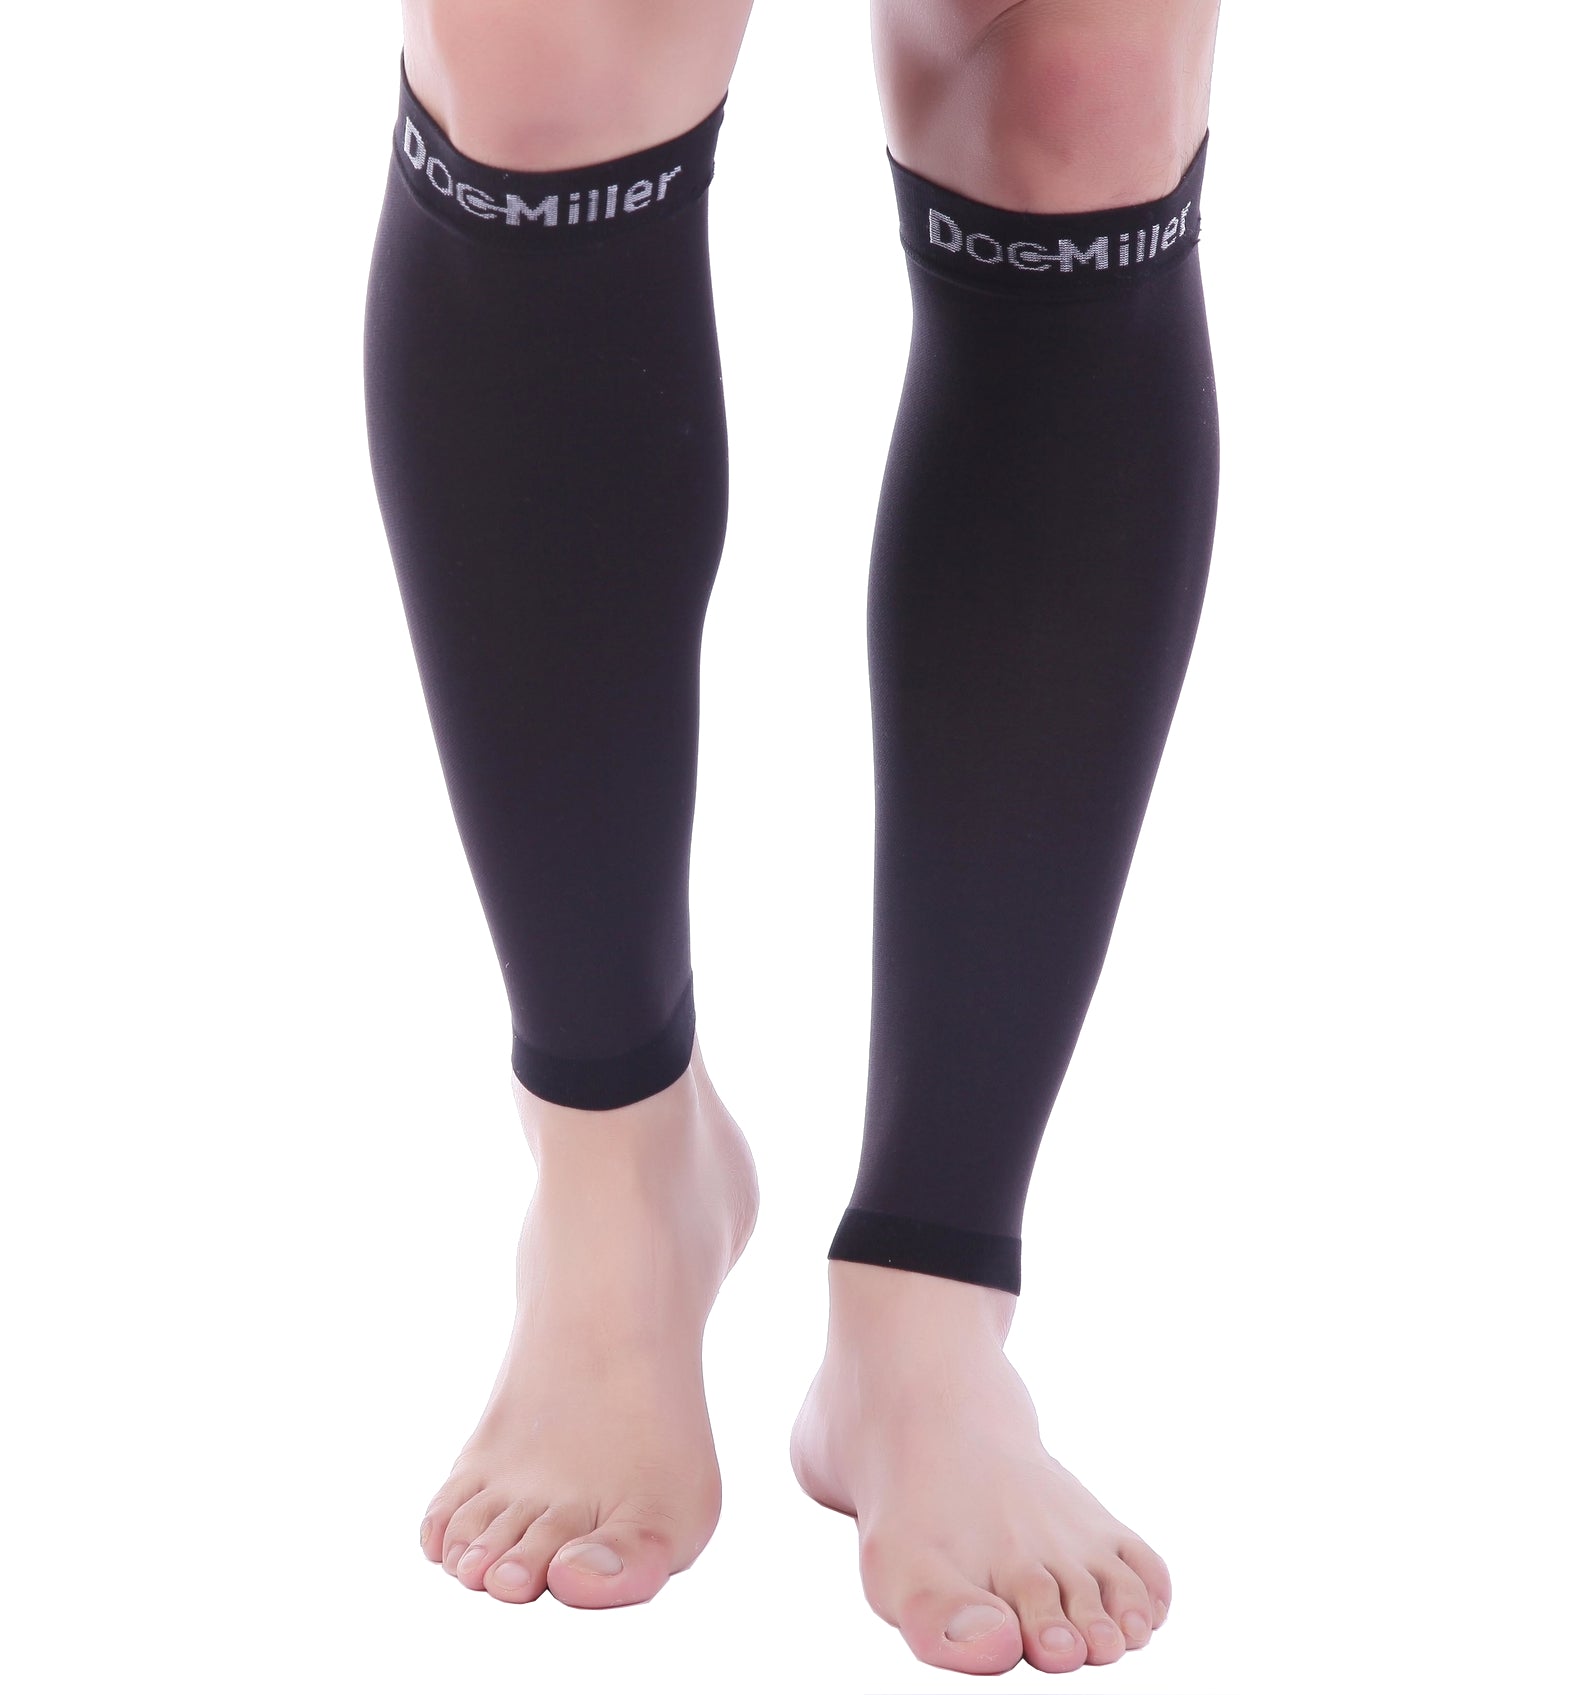 20-30 mmHg Men Calf Sleeve Compression Socks – Varcoh ® Compression Socks